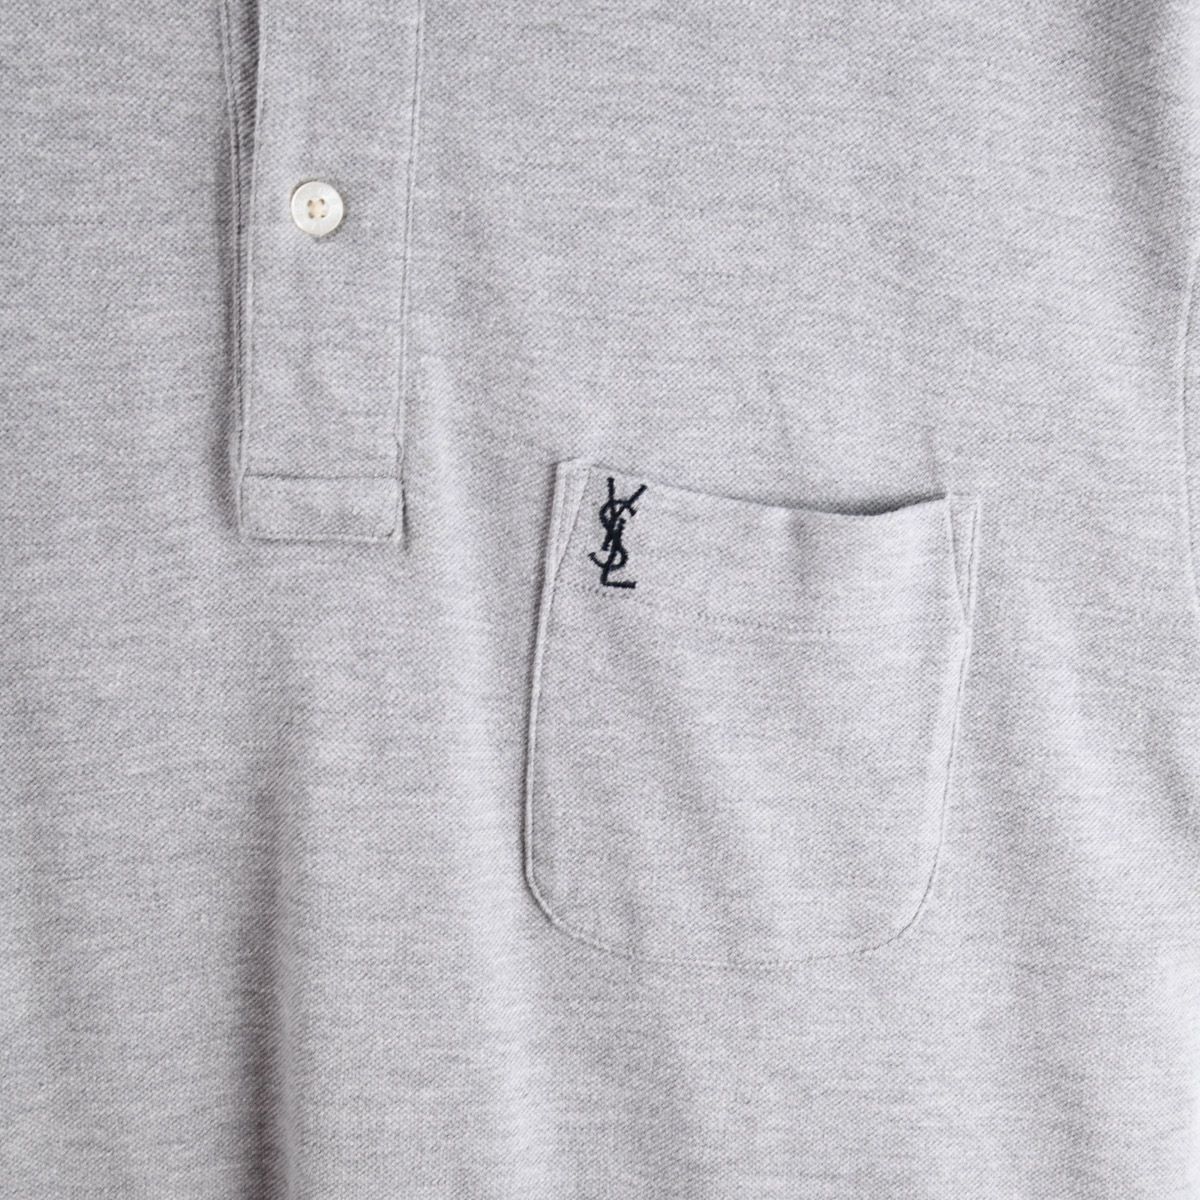 Yves Saint Laurent 'YSL' Grey Polo Shirt